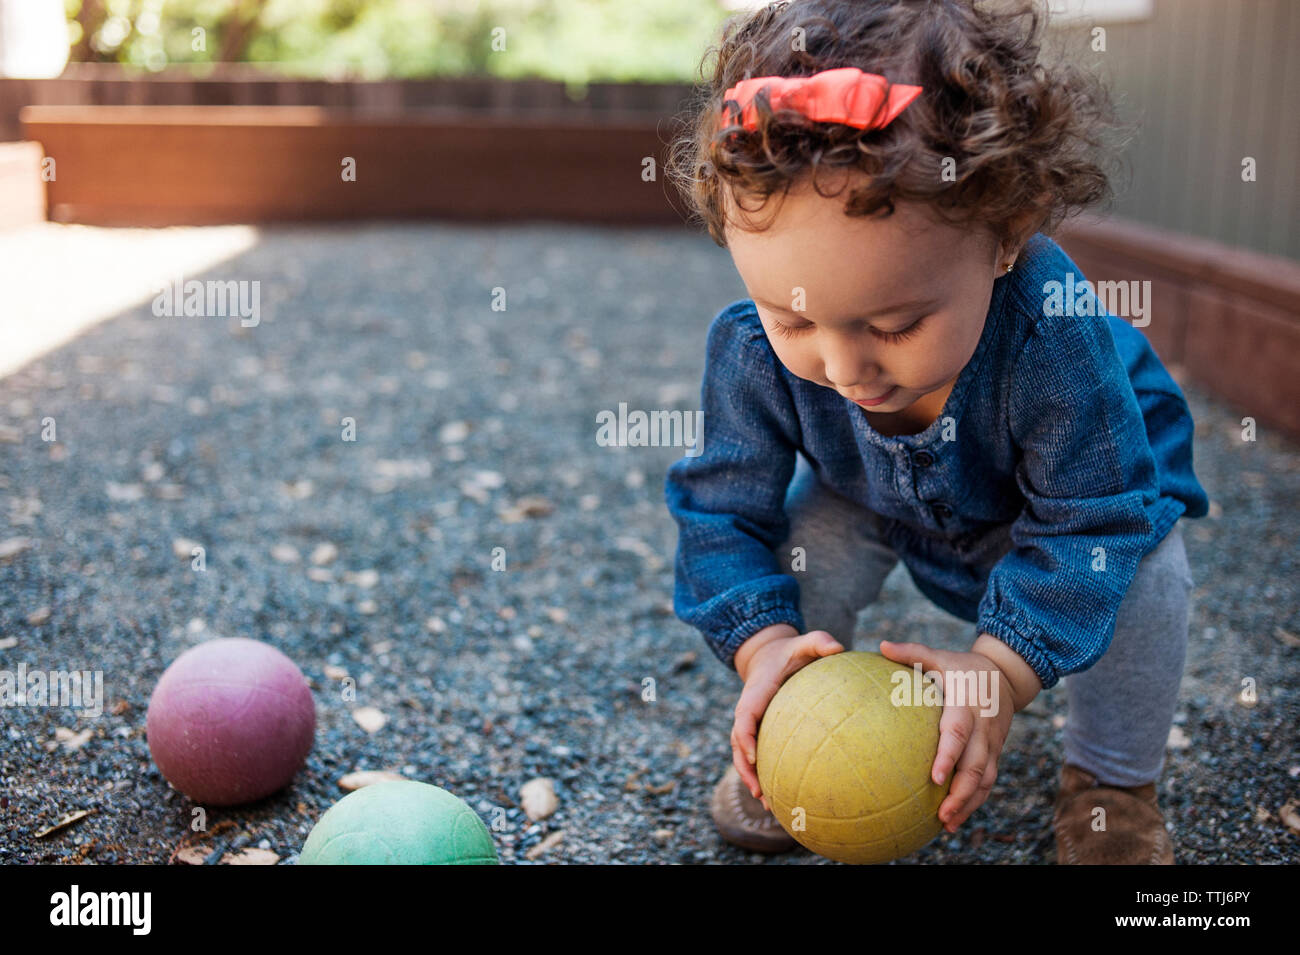 Baby holding ball in backyard Stock Photo